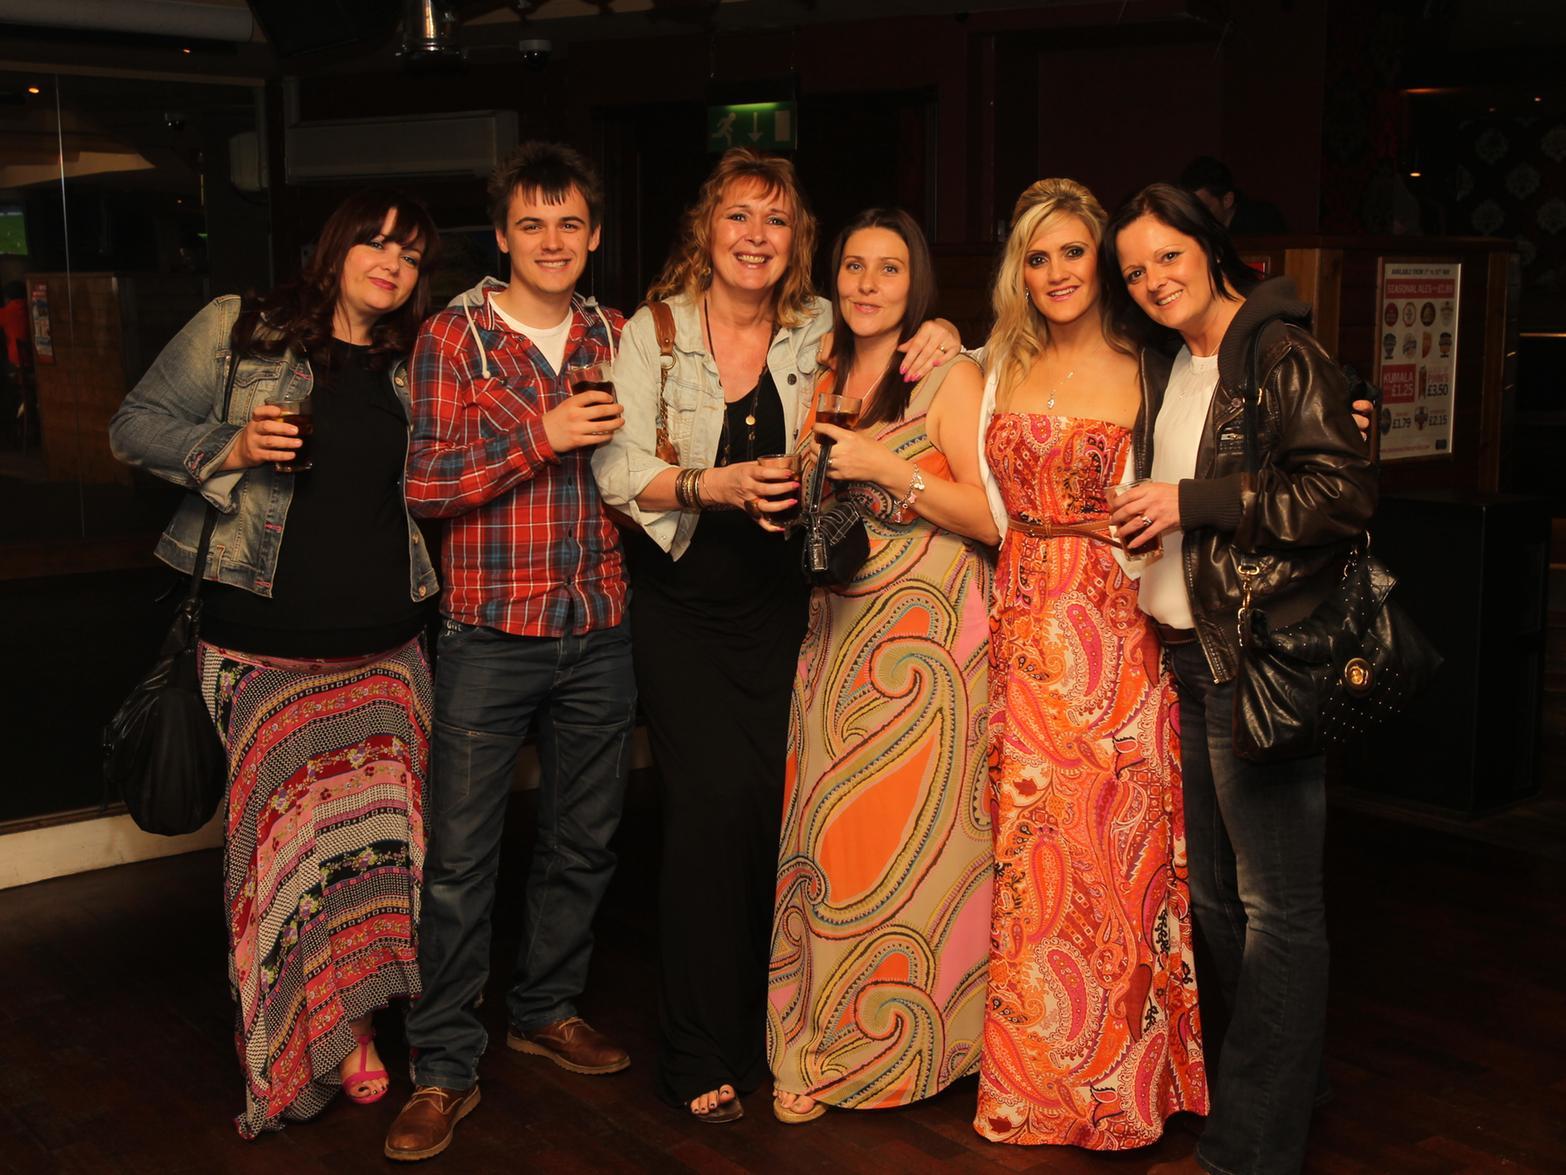 Sam, James, Fiona, Lisa, Chelle and Adele back in 2012